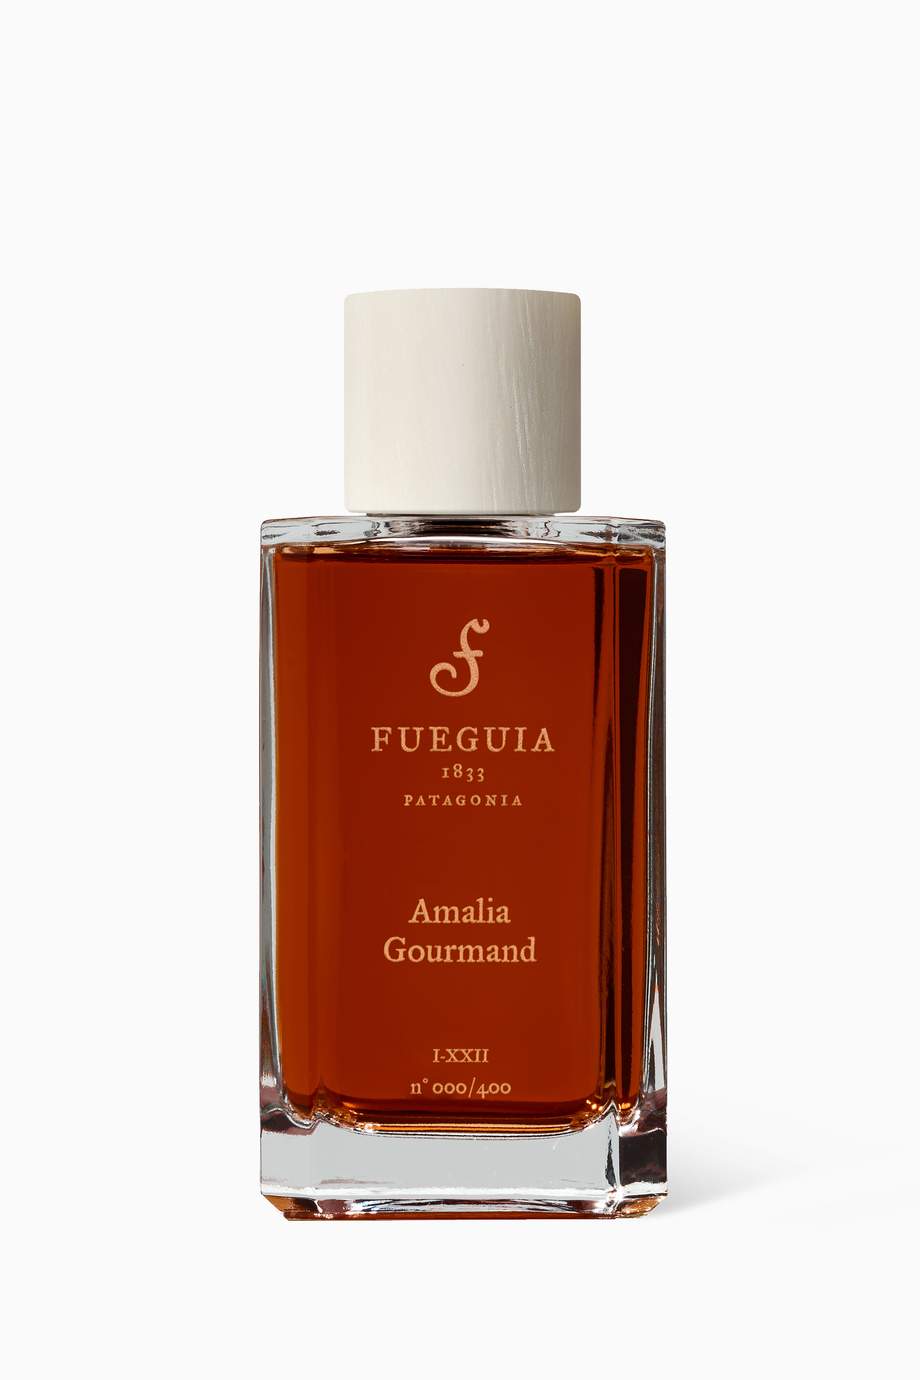 Shop Fueguia 1833 Multicolour Amalia Gourmand Eau de Parfum, 100ml for